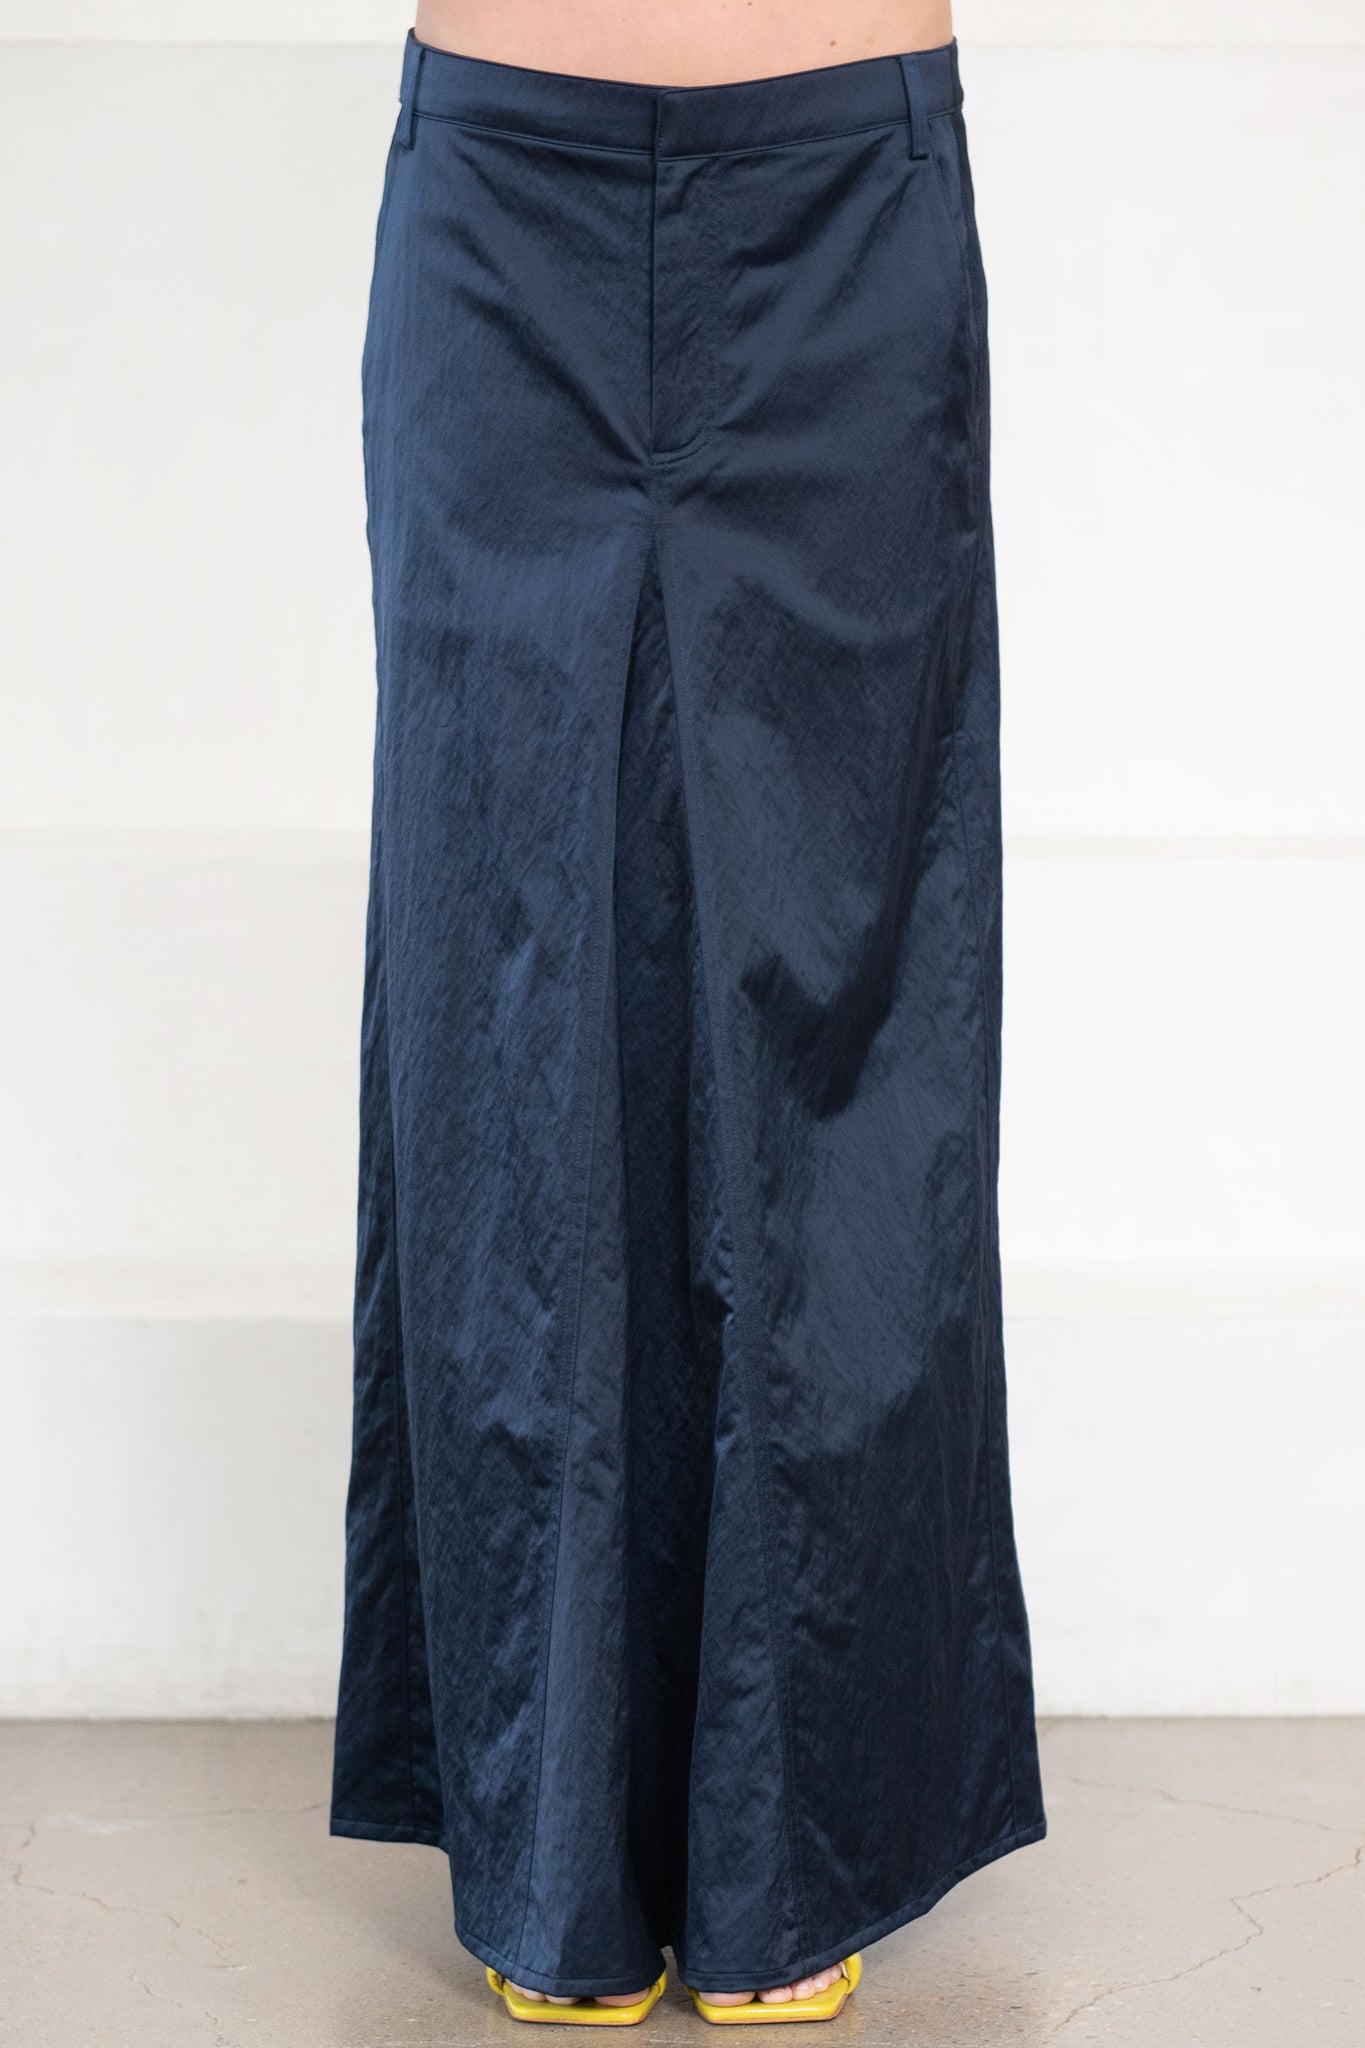 TIBI - Luxe Eco Satin Godet Maxi Skirt, Navy